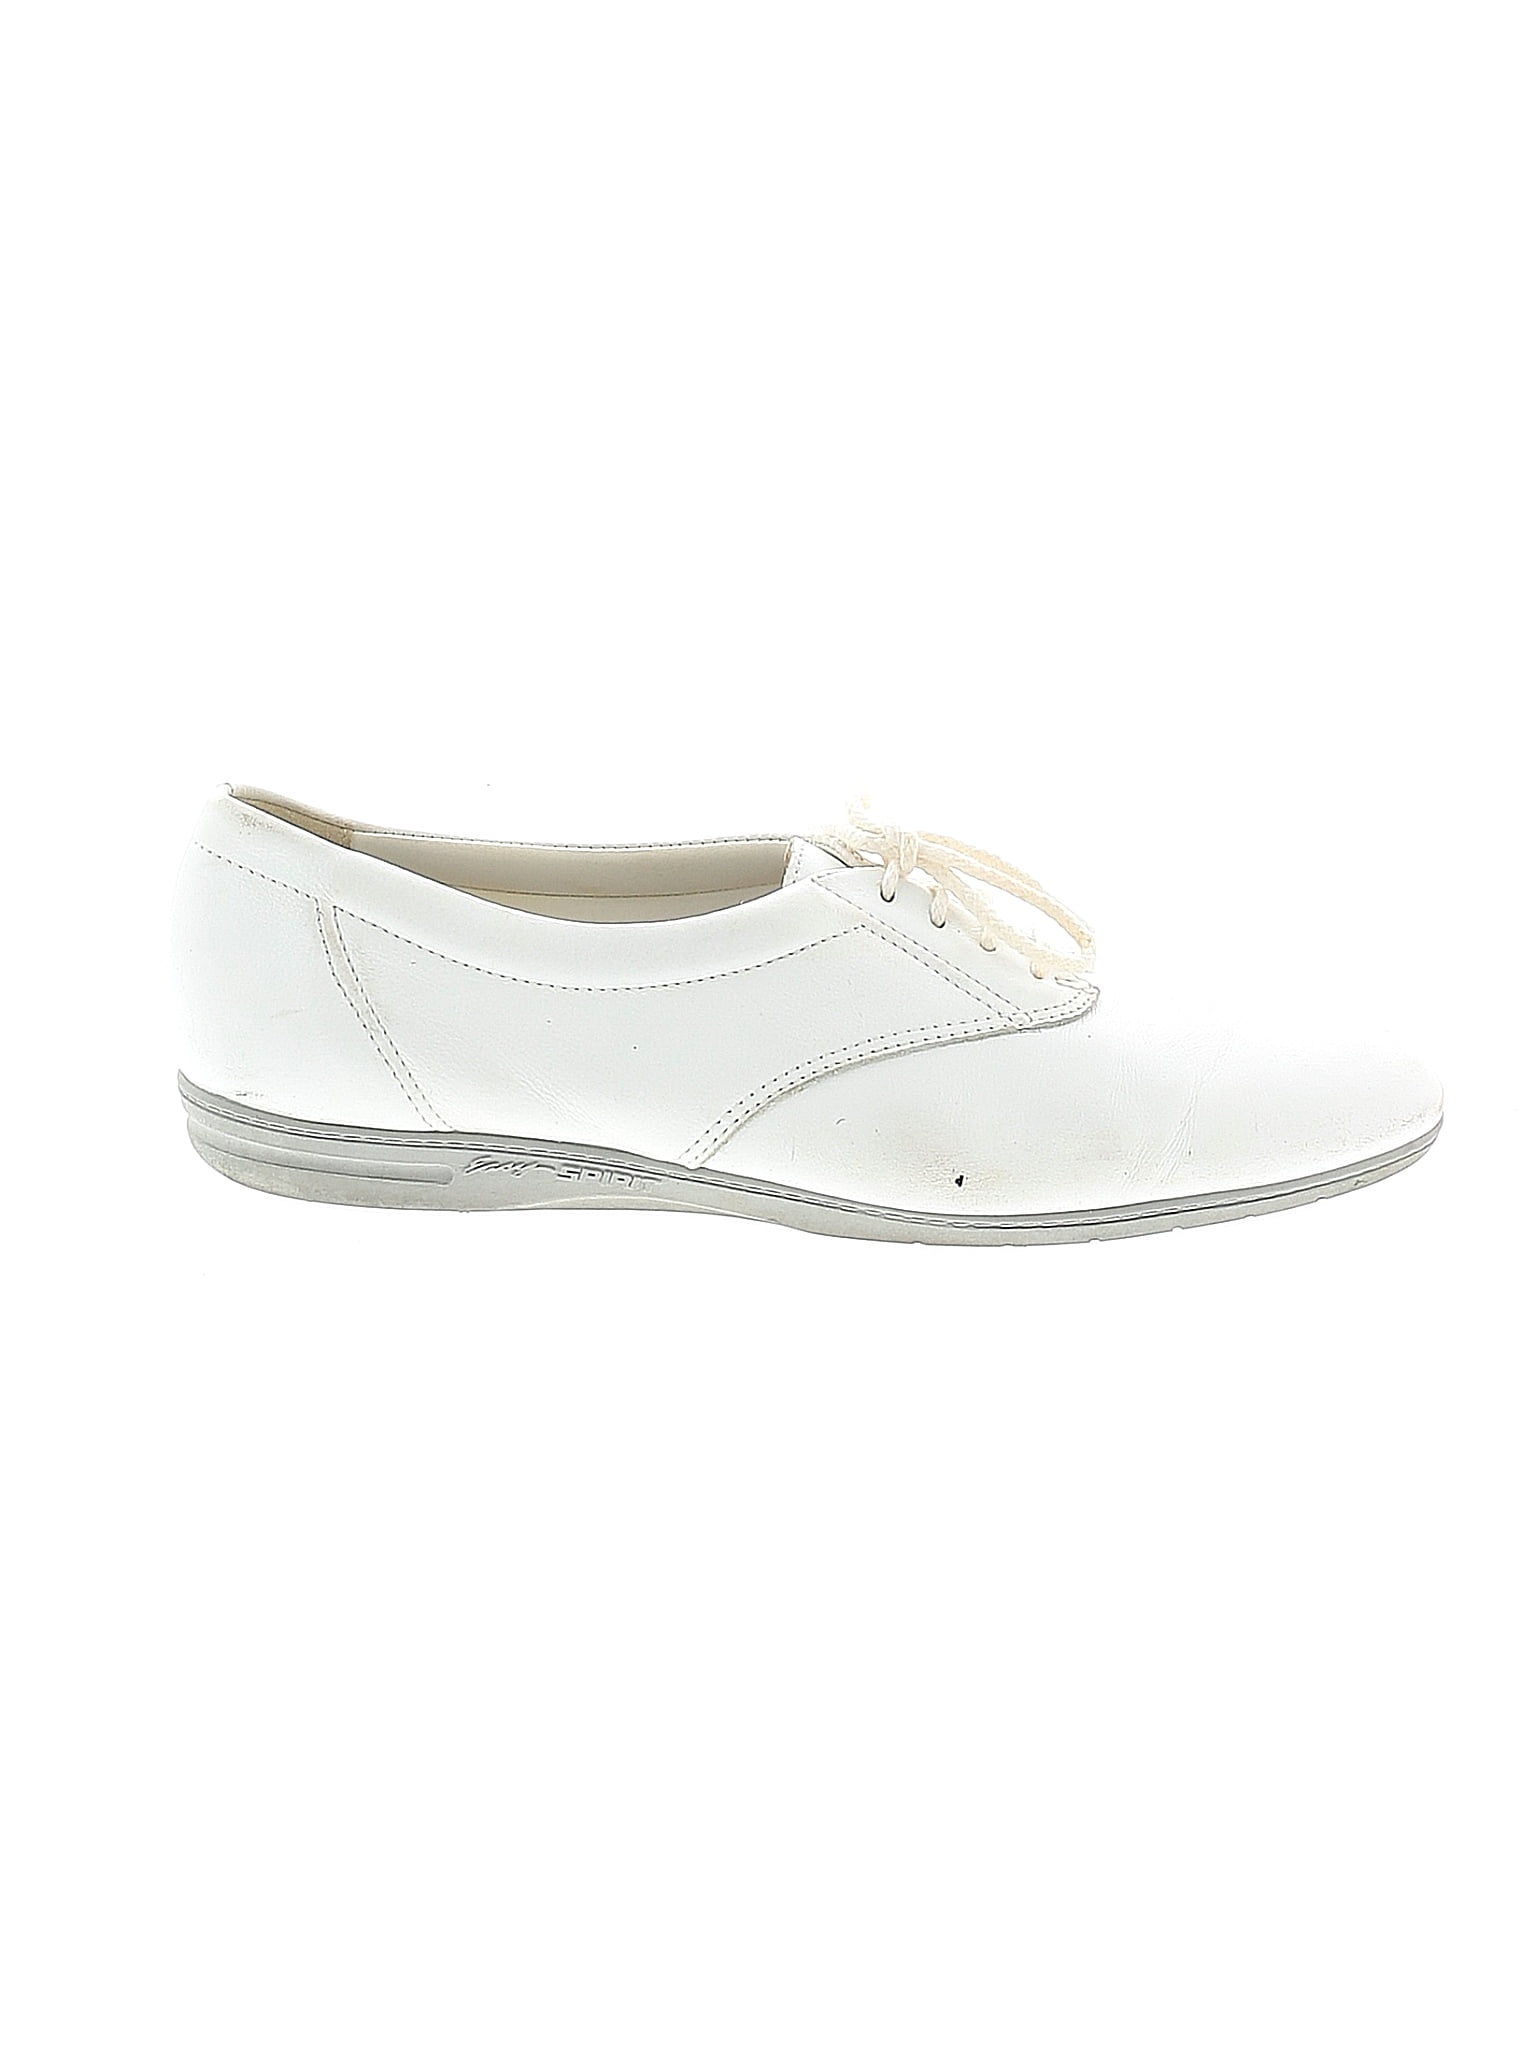 Easy Spirit White Sneakers Size 9 - 60% off | thredUP